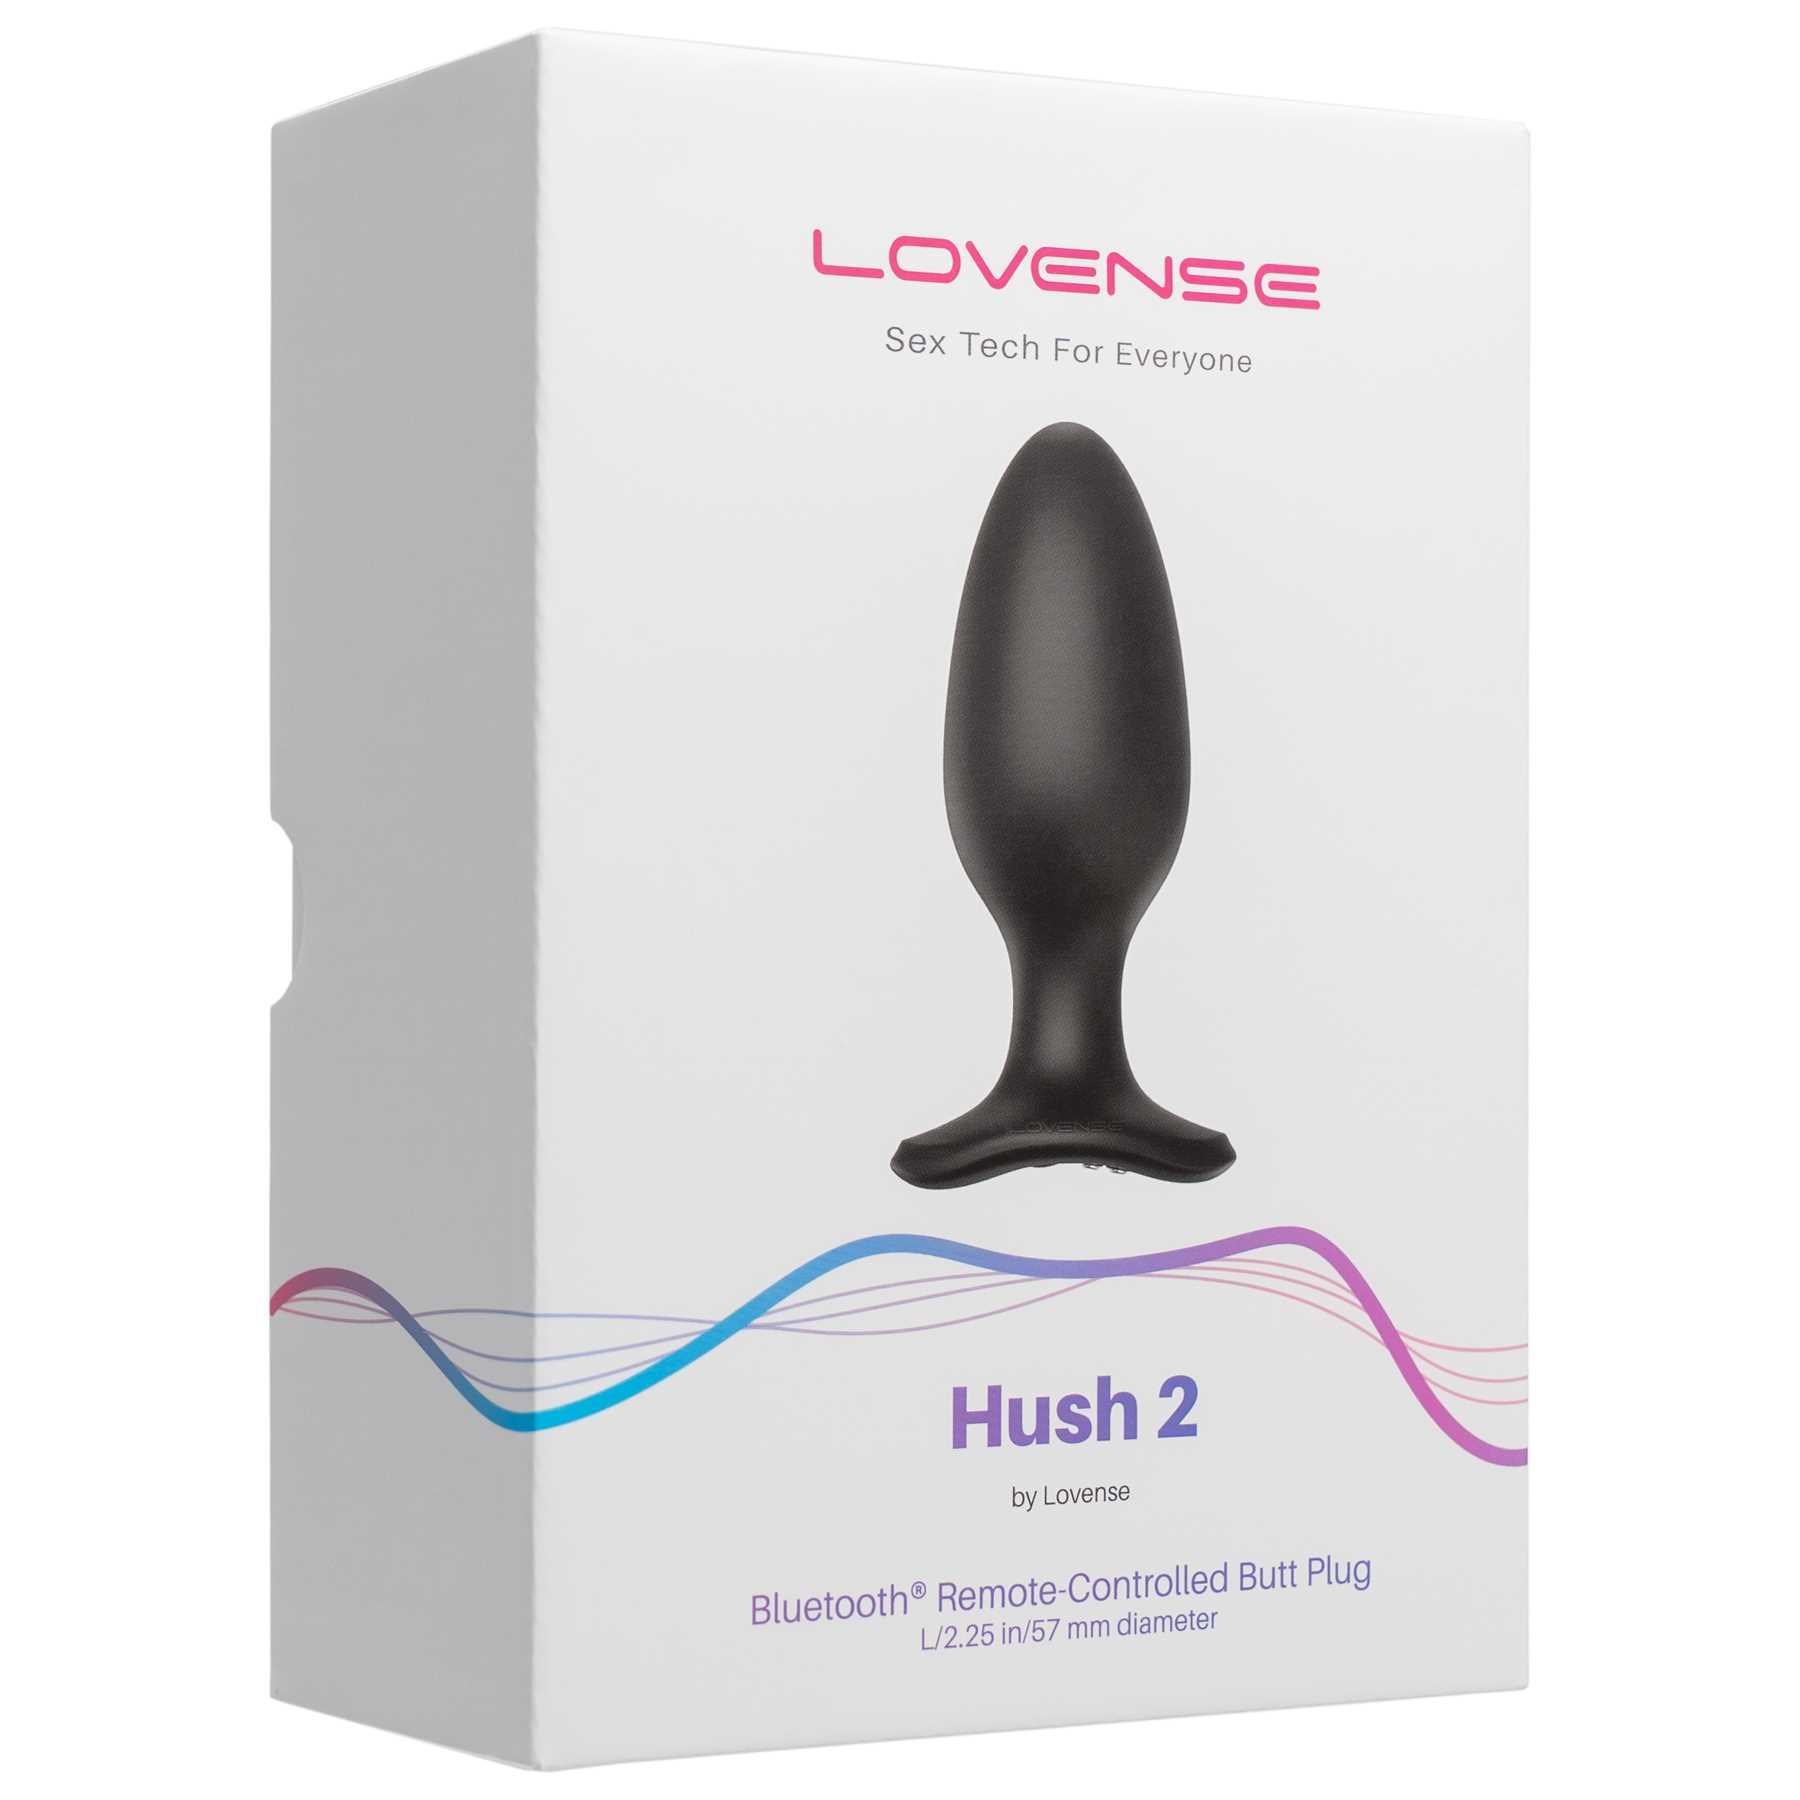 Lovense Hush 2 Bluetooth Vibrating Butt Plug packaging